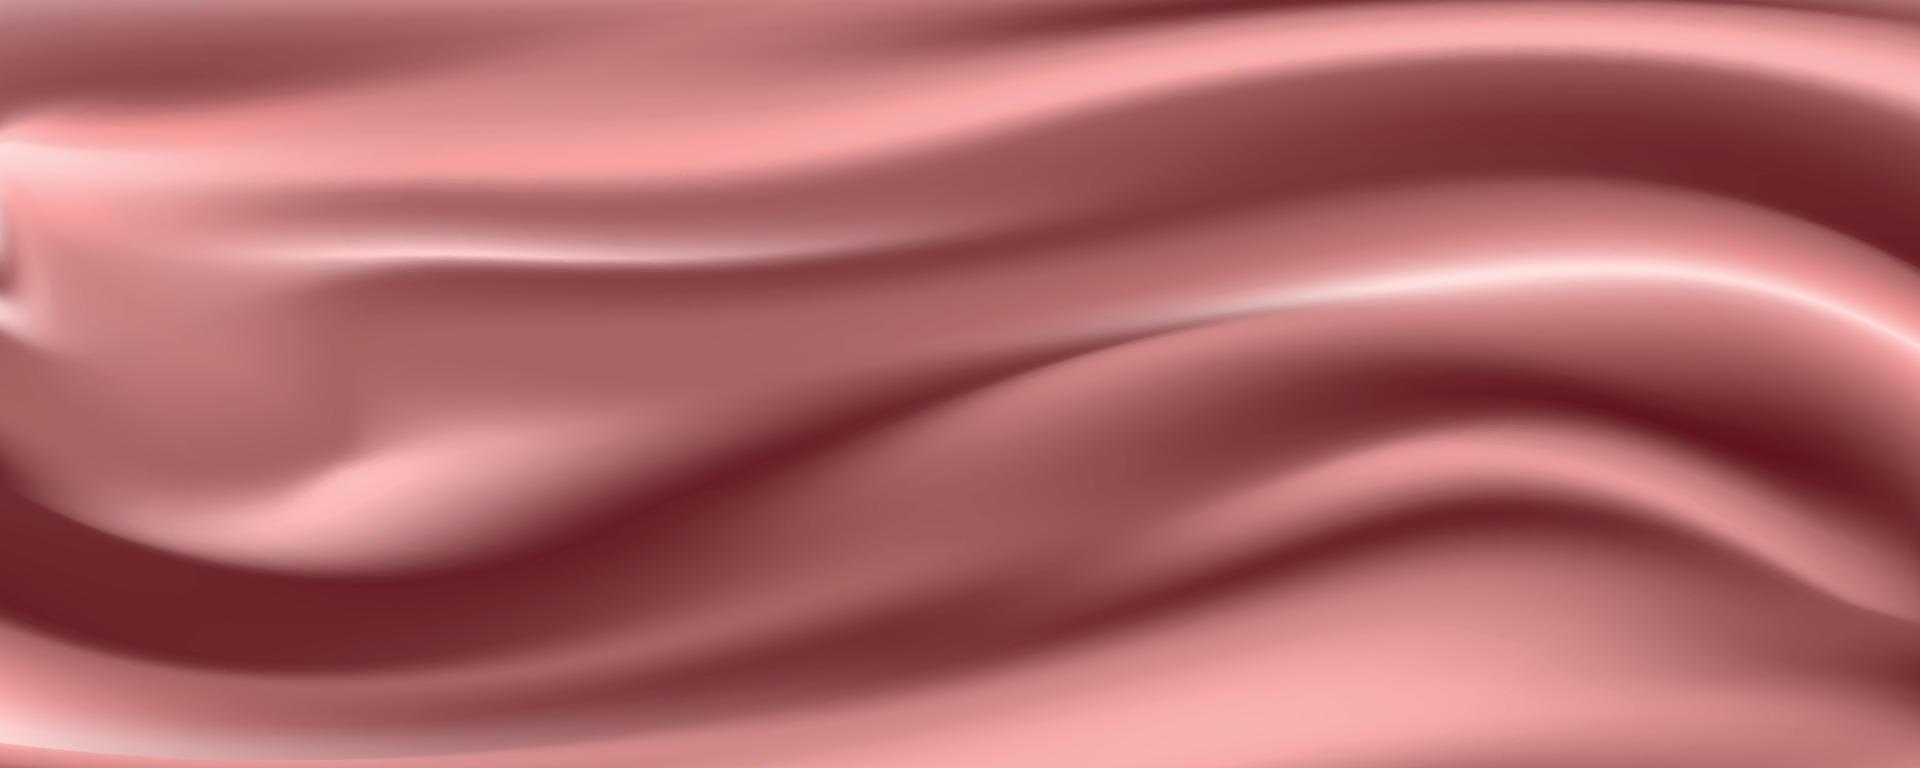 rosa guld silke tyg abstrakt bakgrund, vektor illustration